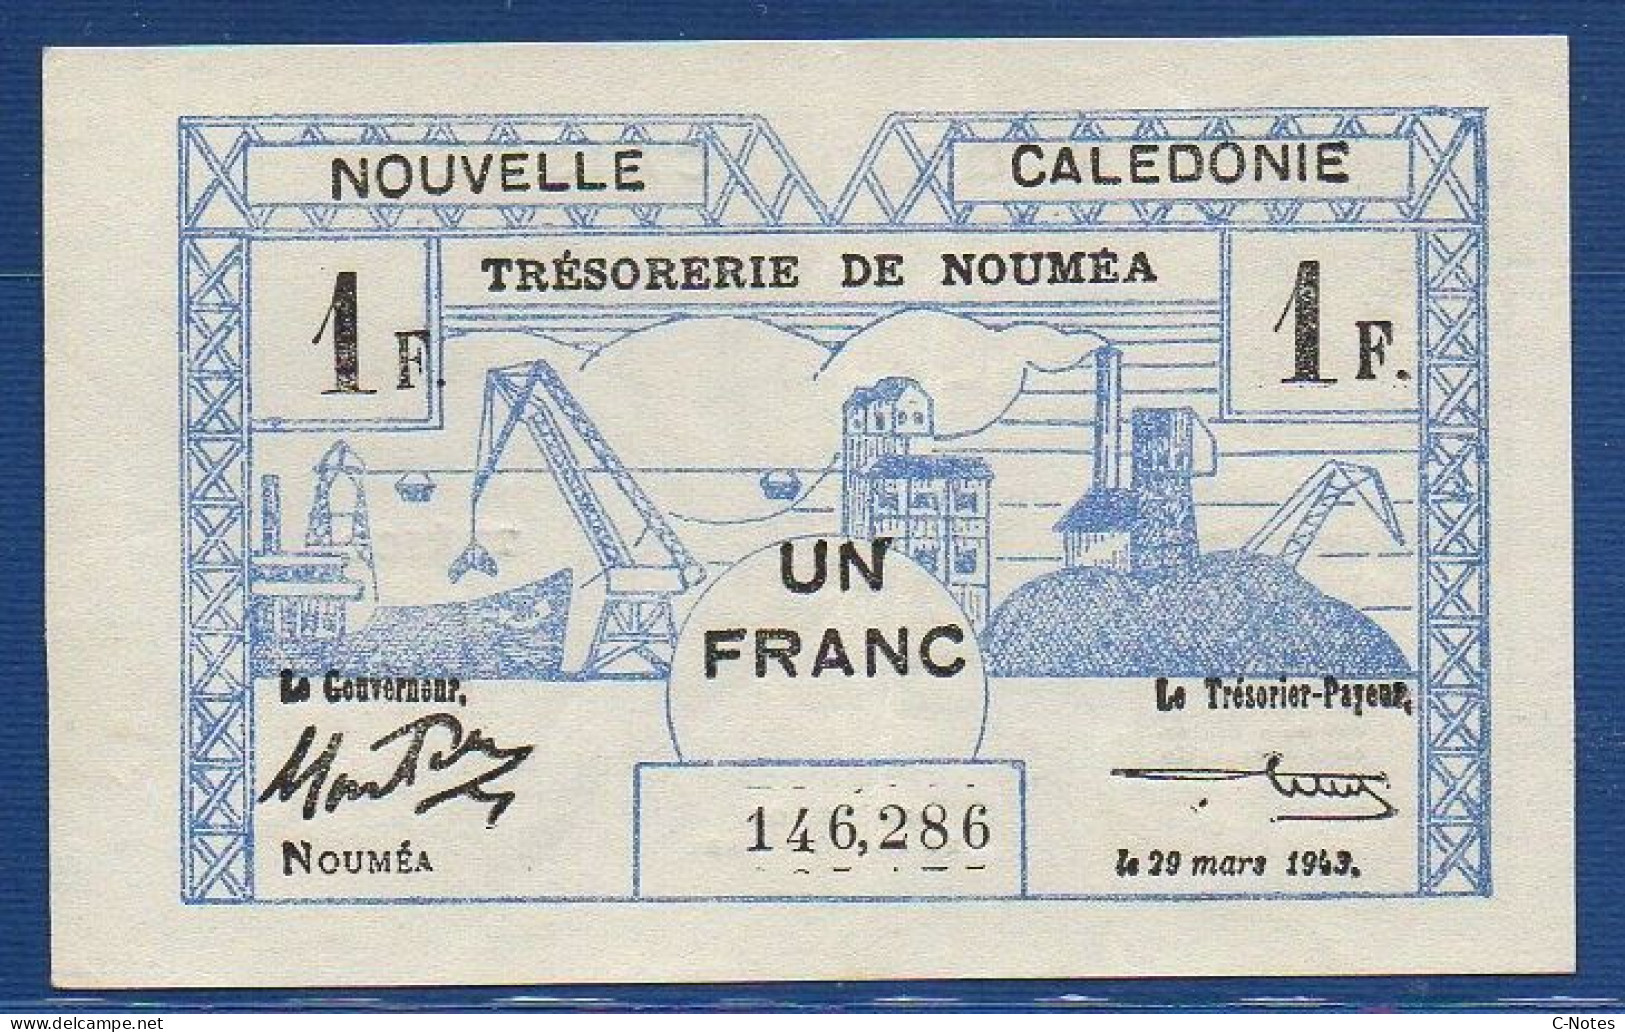 NEW CALEDONIA - Nouméa  - P.55a – 1 Franc 1943 XF/AU, S/n 146,286 - Nouméa (Nieuw-Caledonië 1873-1985)